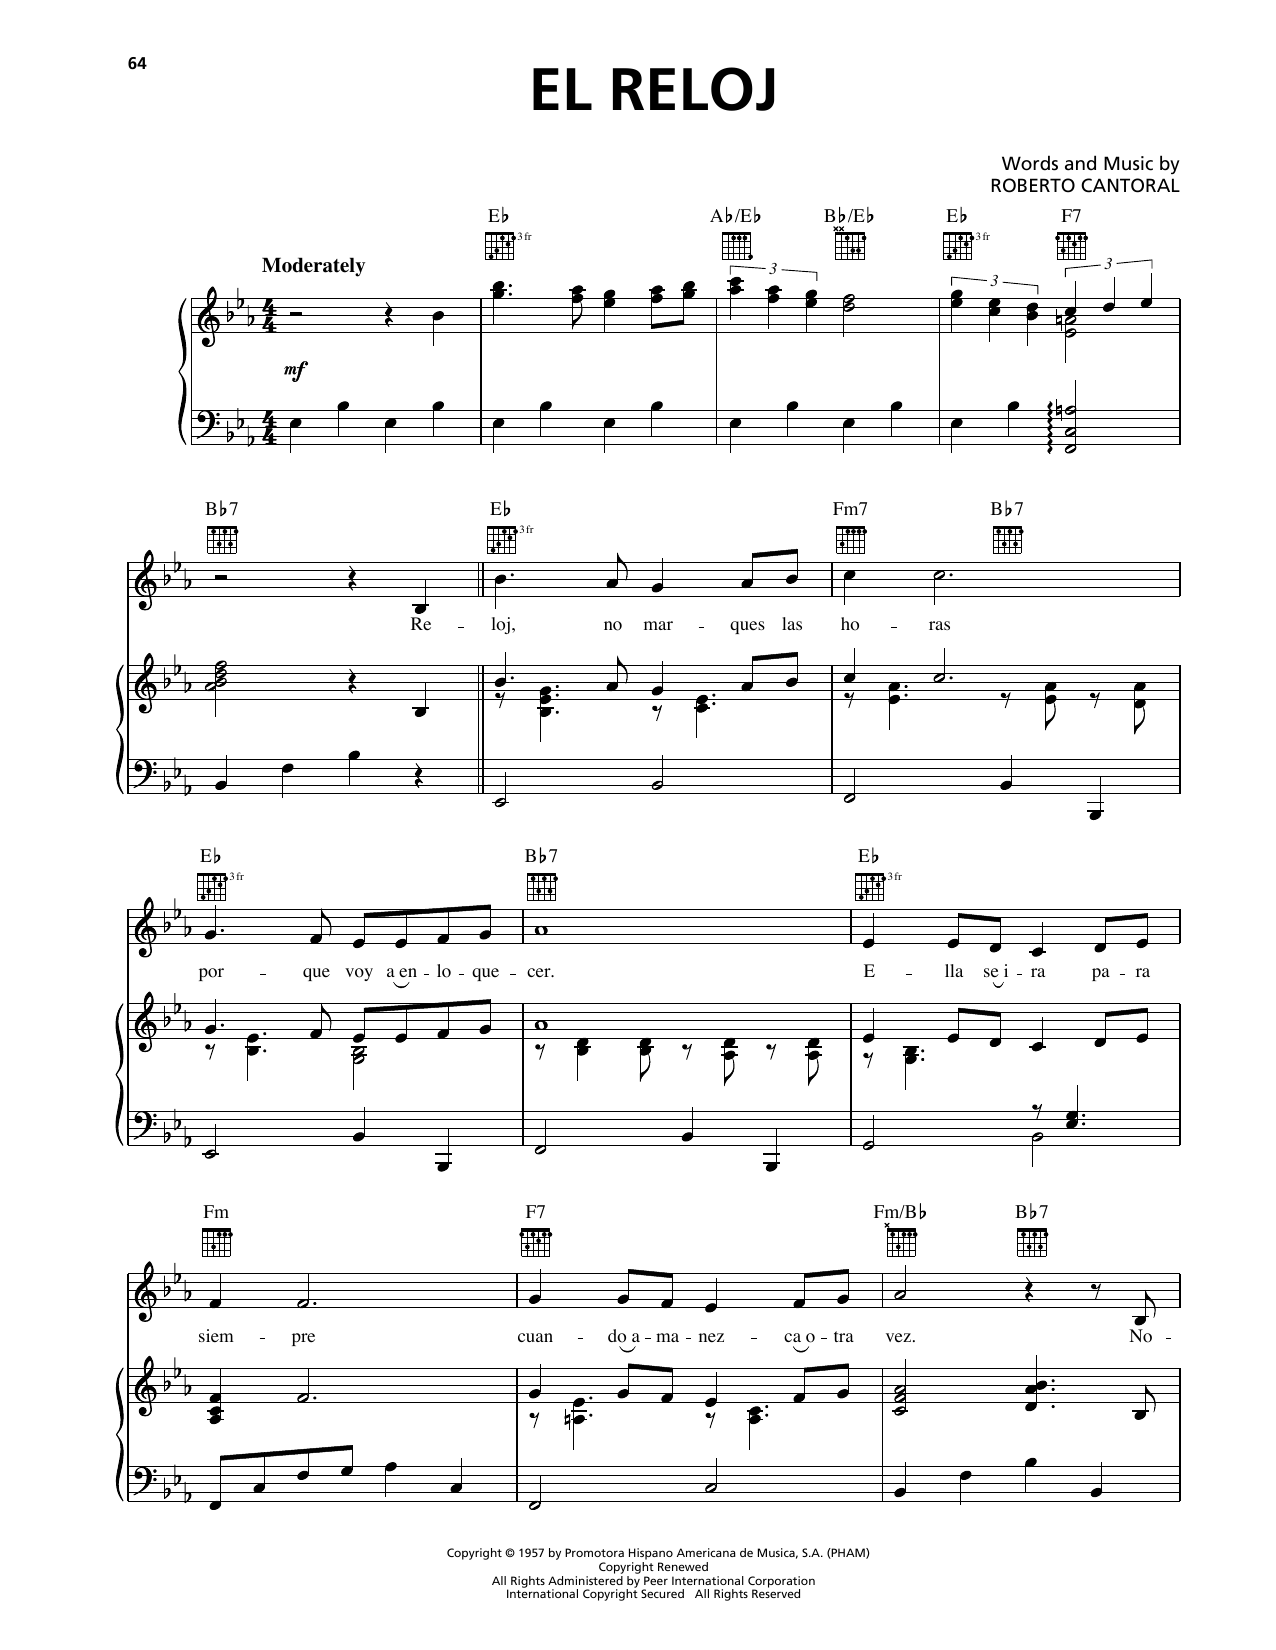 Luis Miguel El Reloj sheet music notes printable PDF score